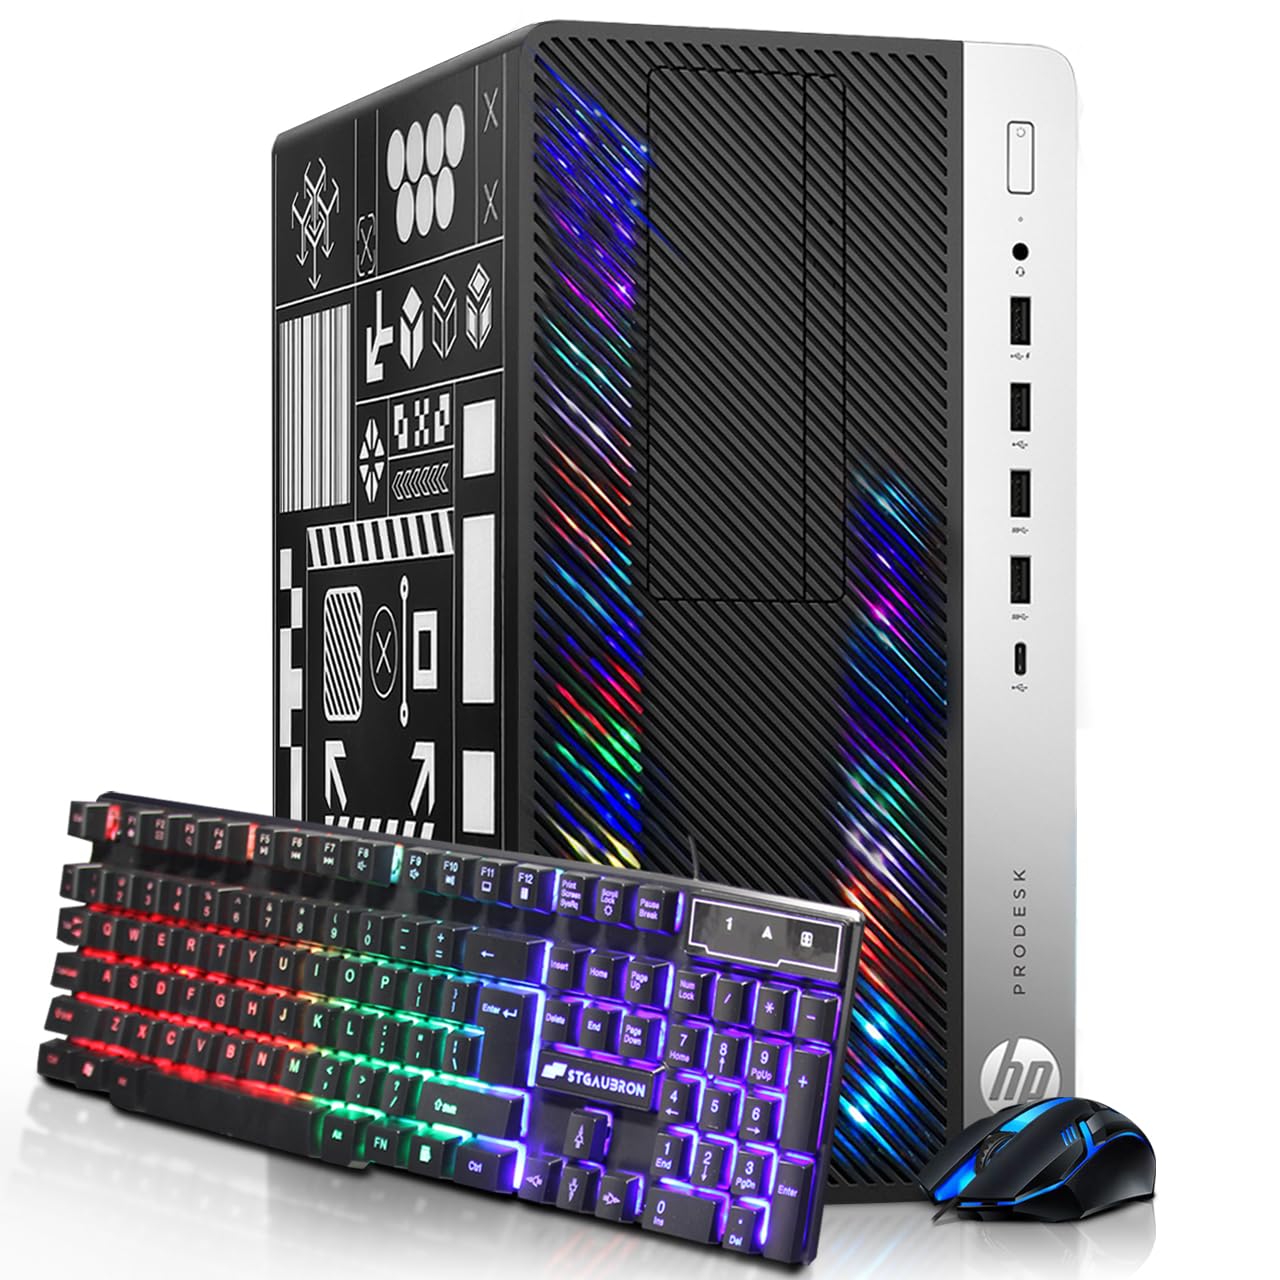 HP RGB Gaming Desktop Computer, Intel Quad Core I5-6500 up to 3.6GHz, GeForce GT 1030 2G, 16GB DDR4, 512G SSD, RGB Keyboard & Mouse, 600M WiFi & Bluetooth 5.0, Win 10 Pro (Renewed)